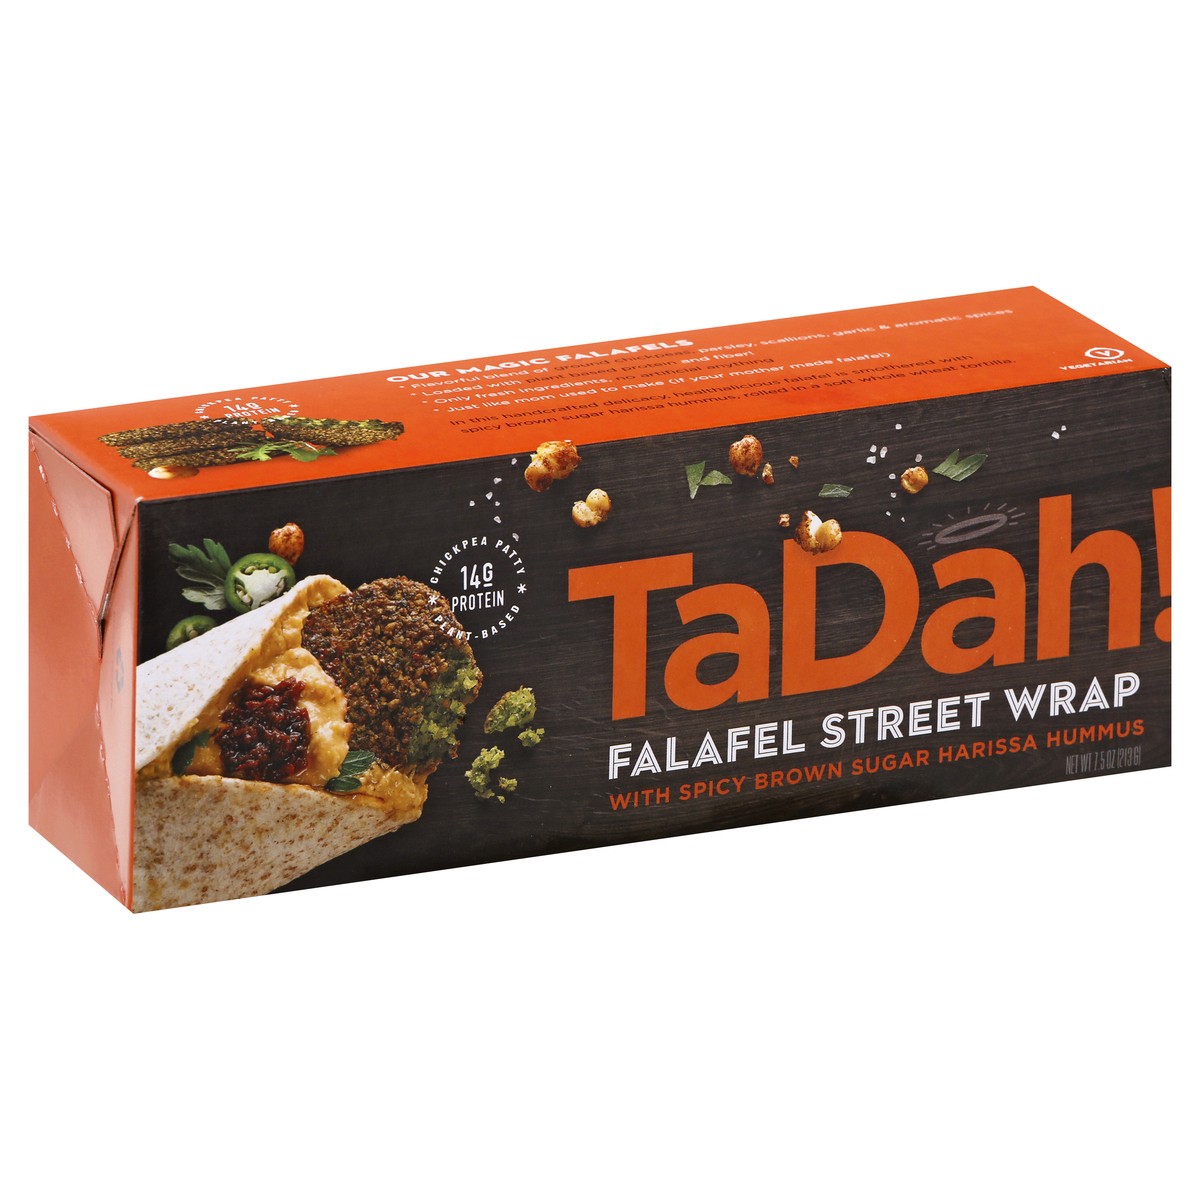 slide 10 of 13, Tadah! with Spicy Brown Sugar Harissa Hummus Falafel Street Wrap 7.5 oz, 7.5 oz